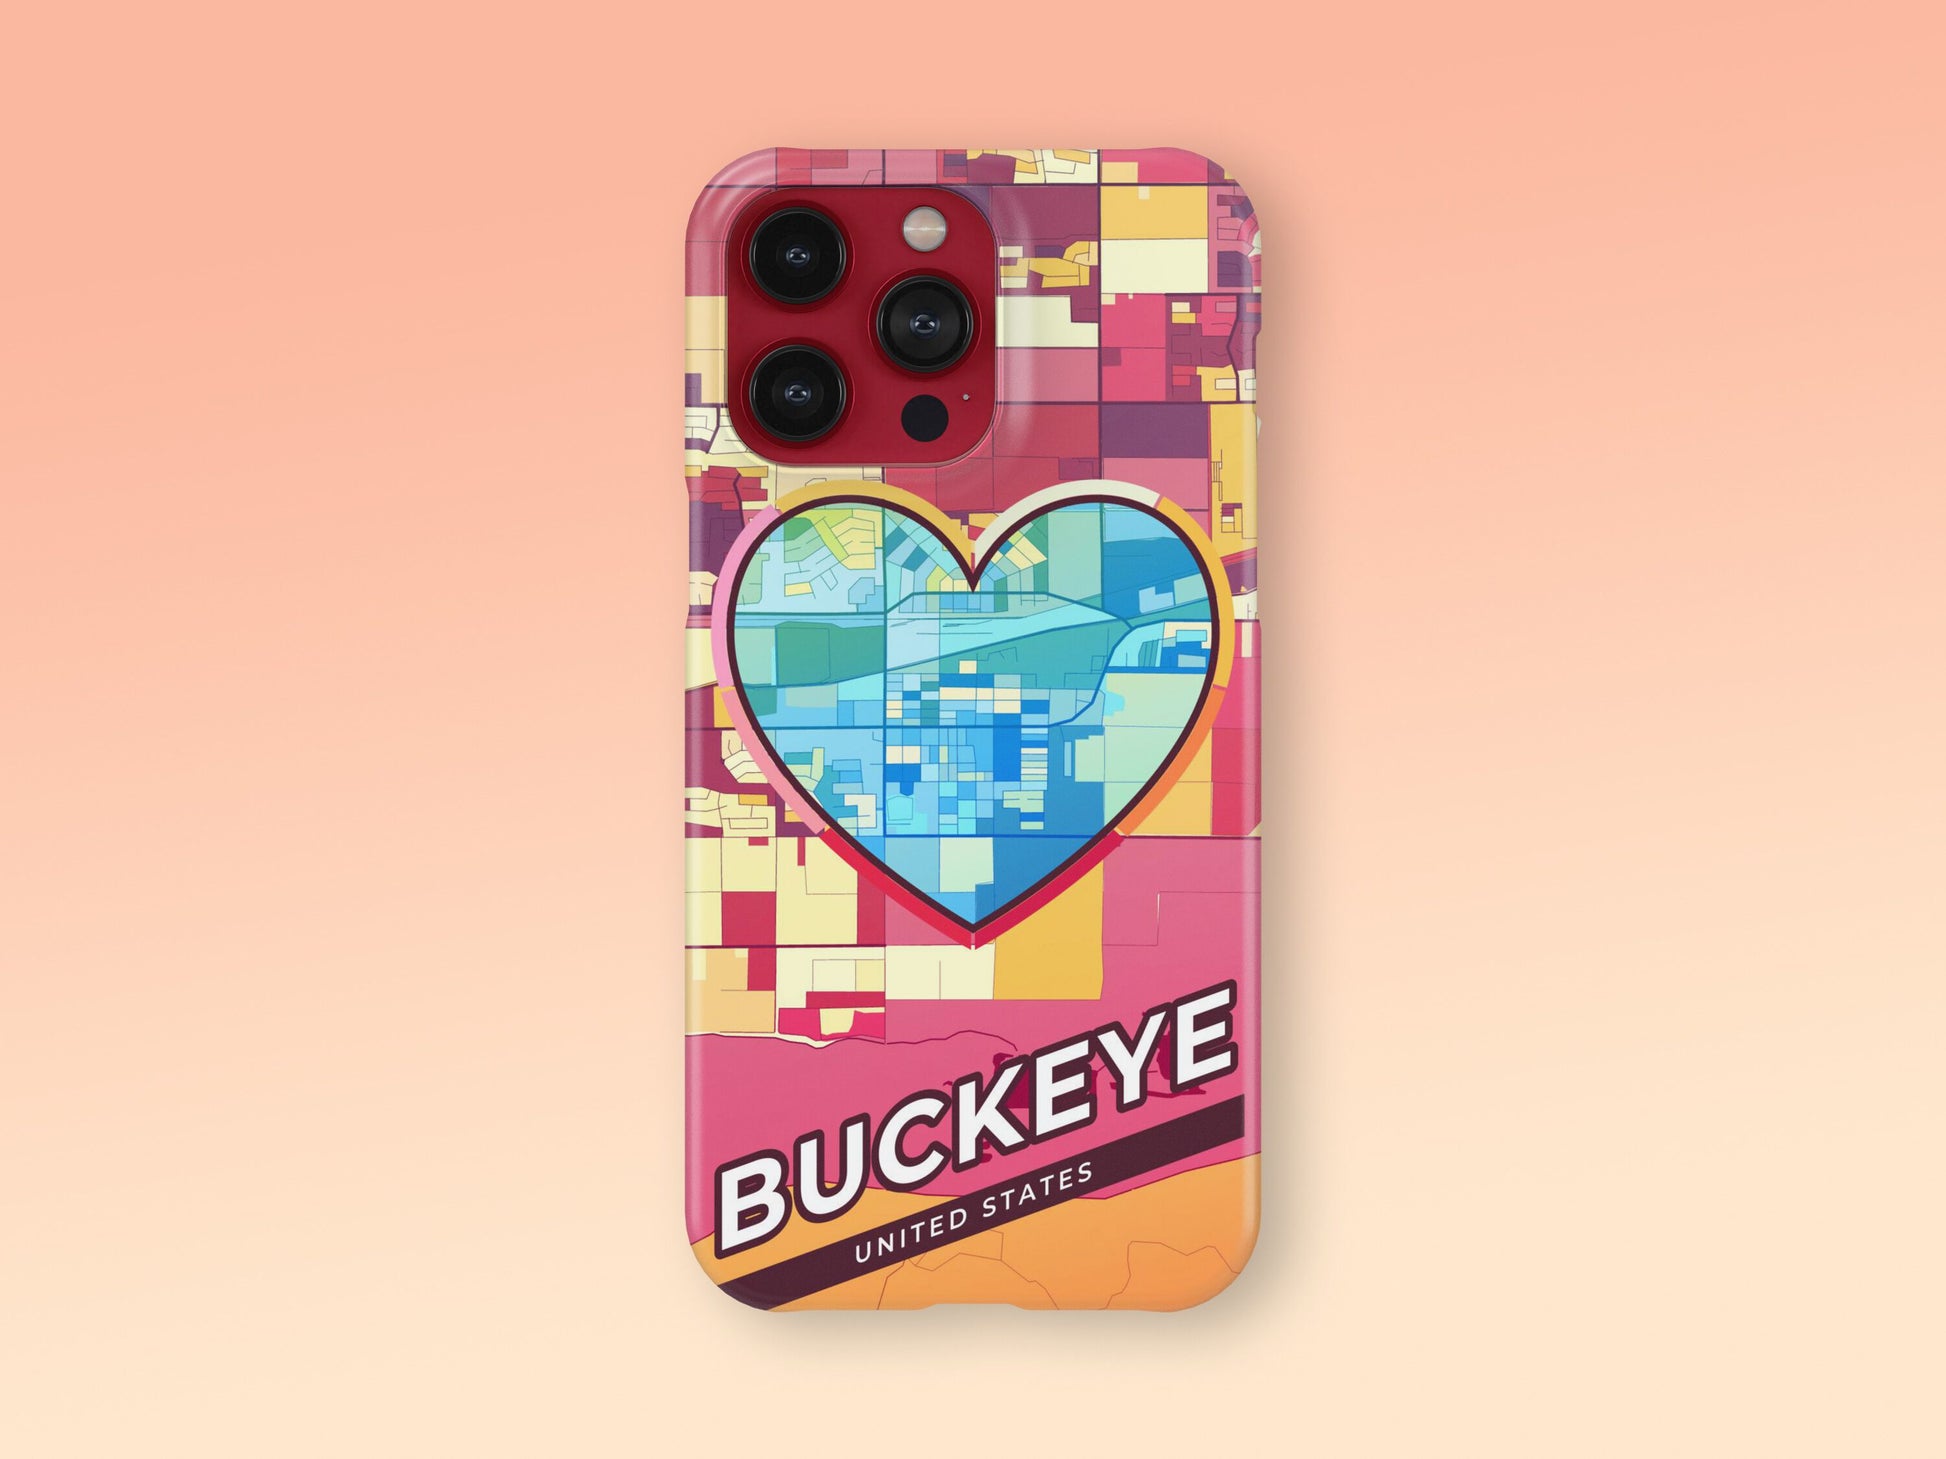 Buckeye Arizona slim phone case with colorful icon. Birthday, wedding or housewarming gift. Couple match cases. 2